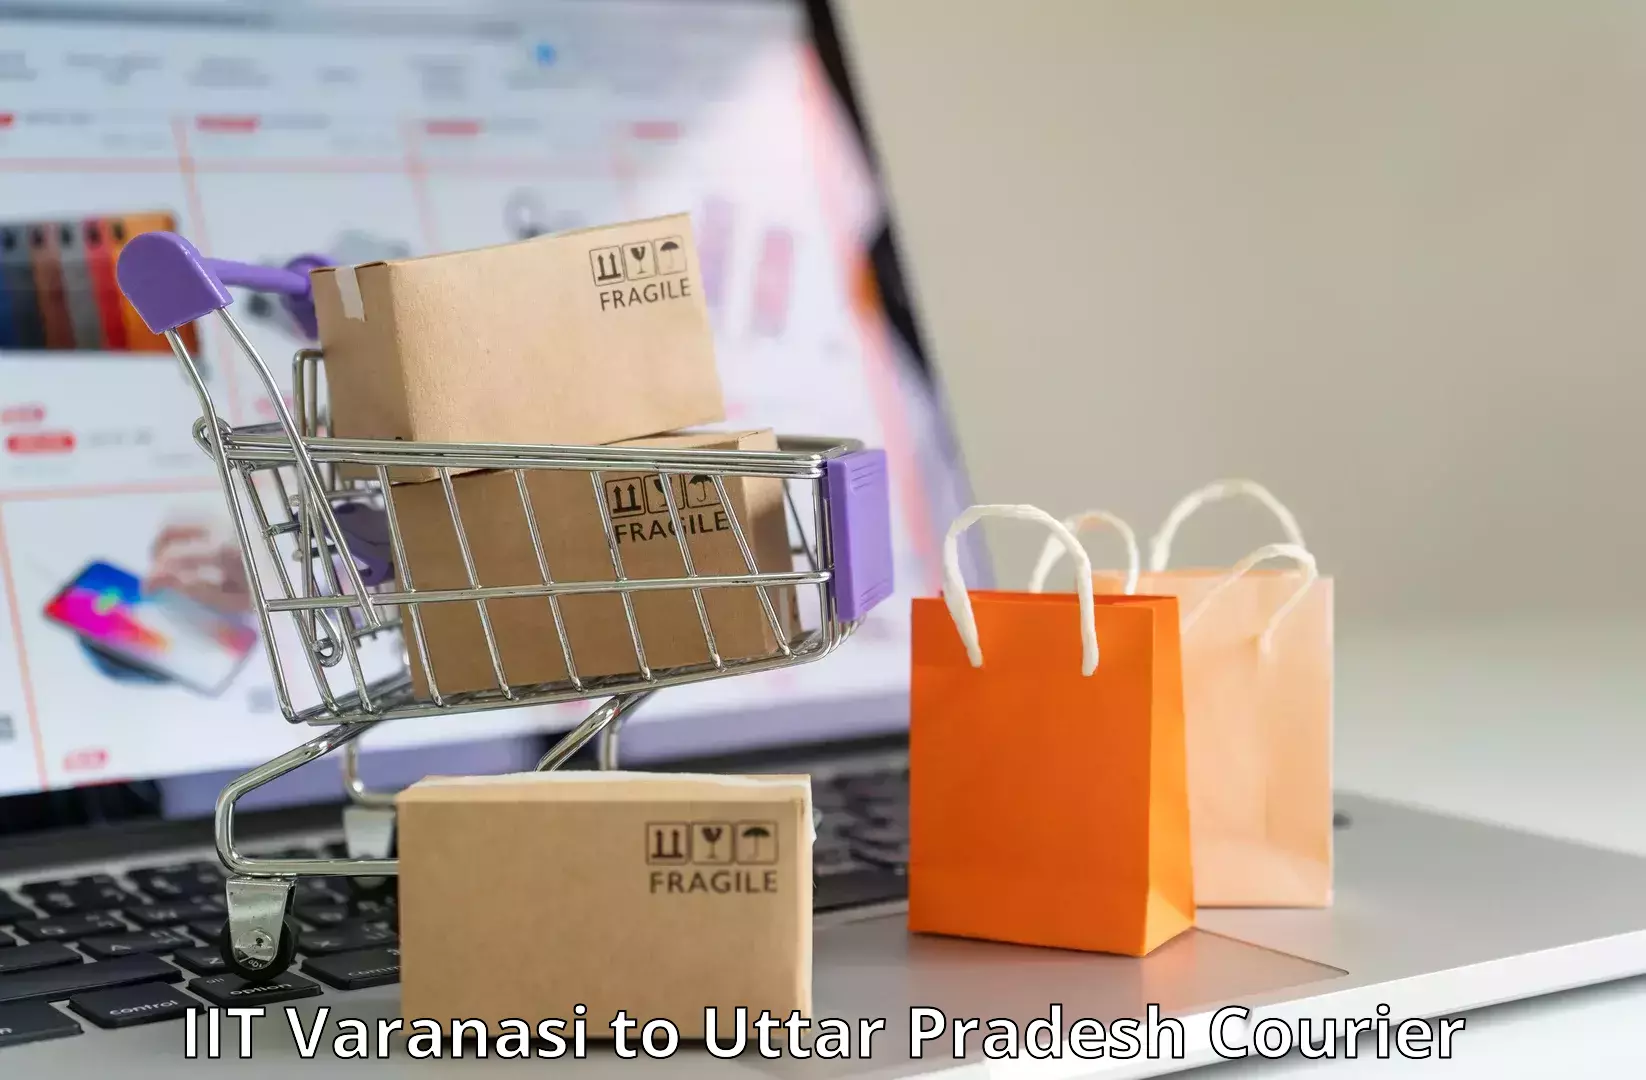 Subscription-based courier IIT Varanasi to Uttar Pradesh